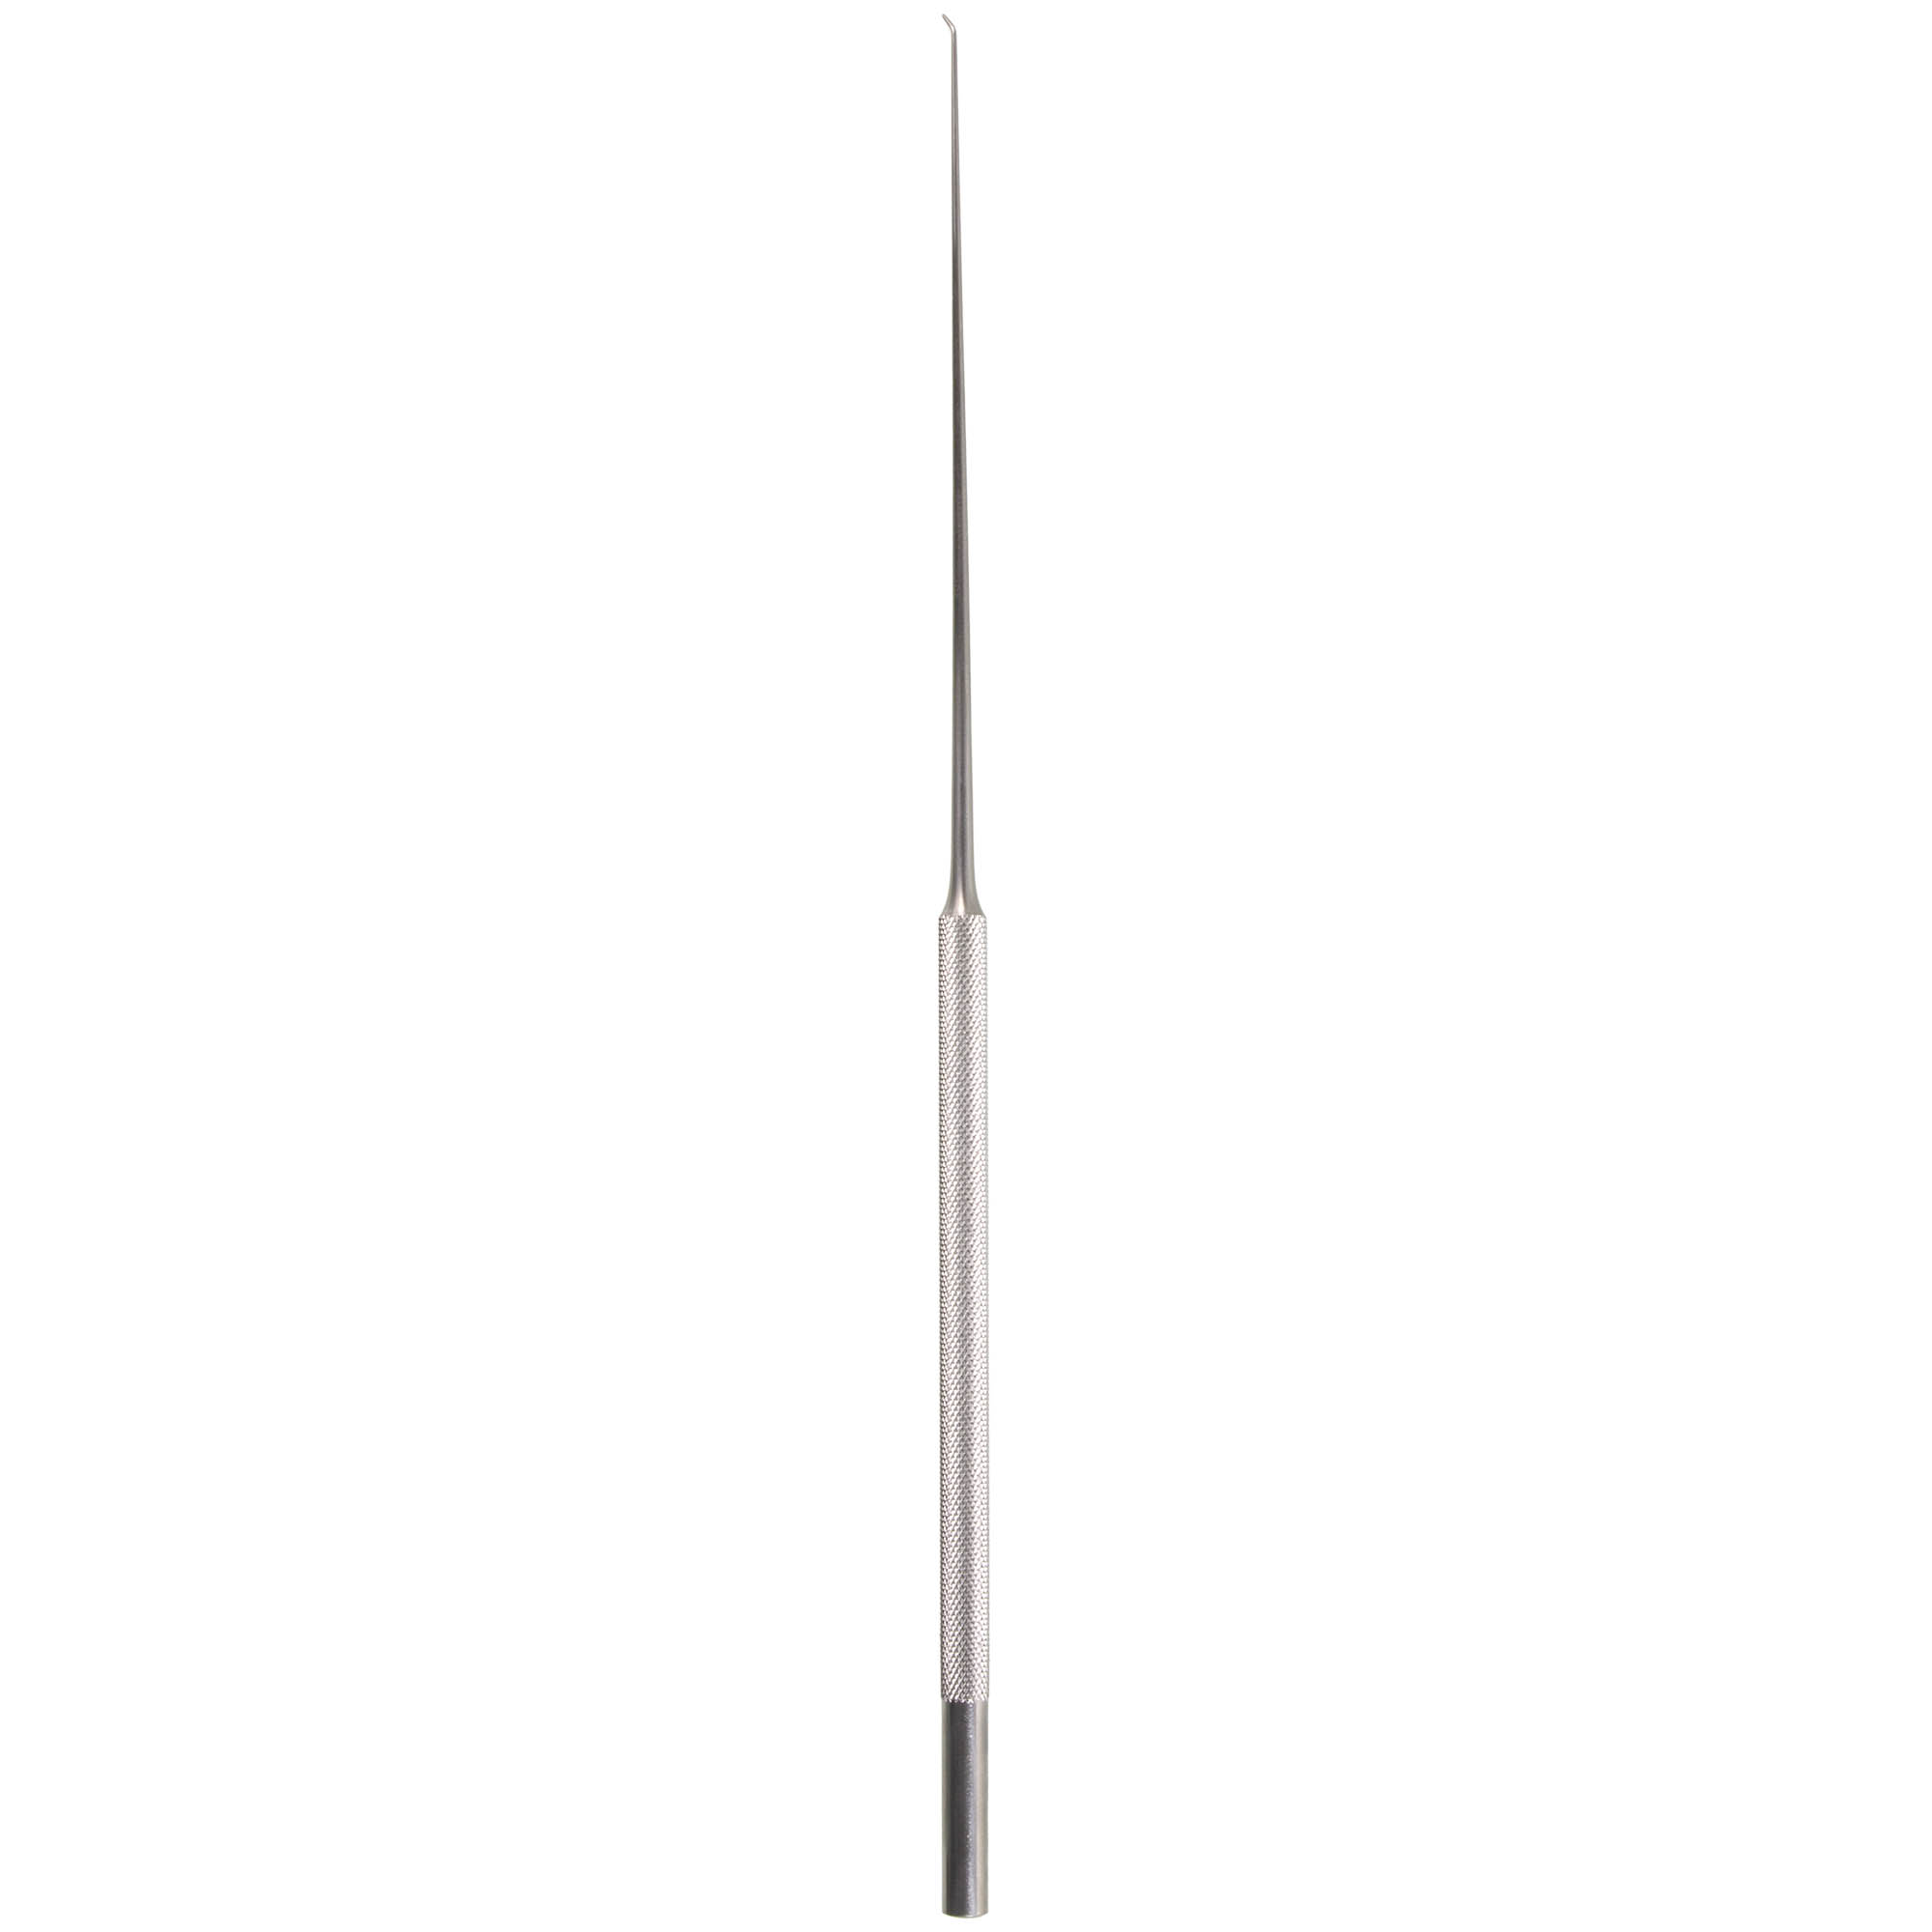 Yasargil Spring Hook, 12 1/4 - BOSS Surgical Instruments